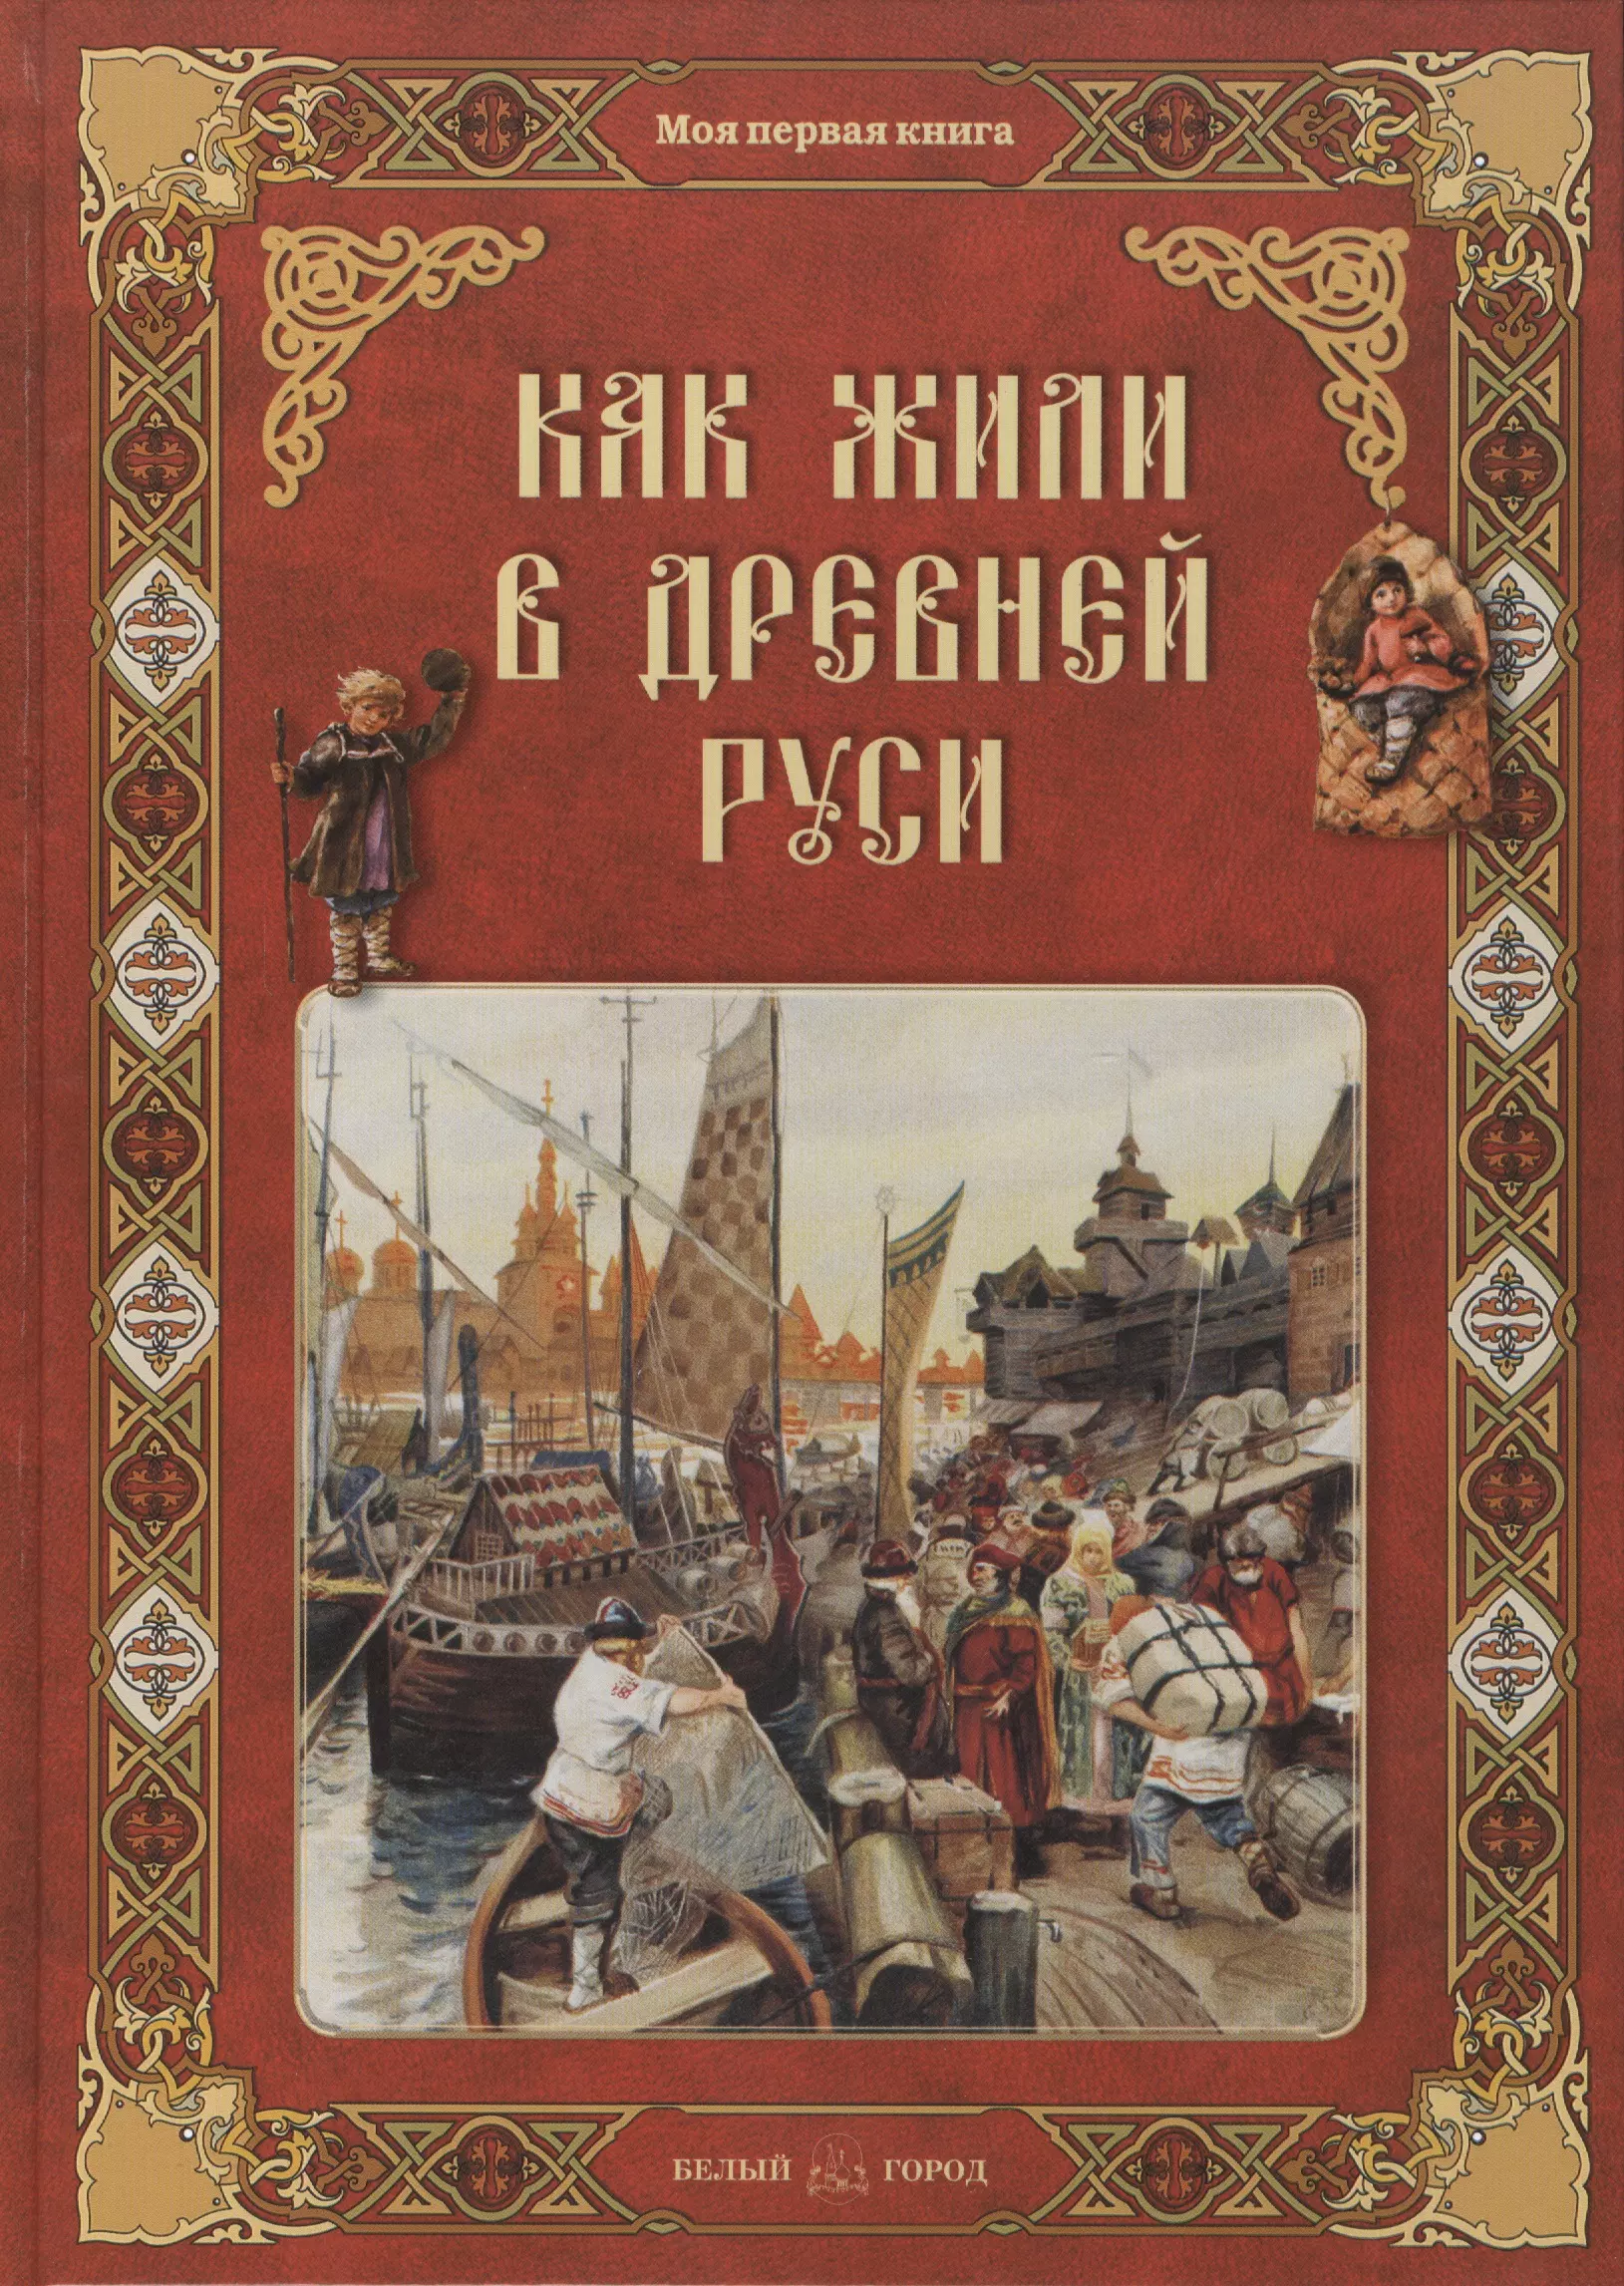 Дети с книгой на Руси